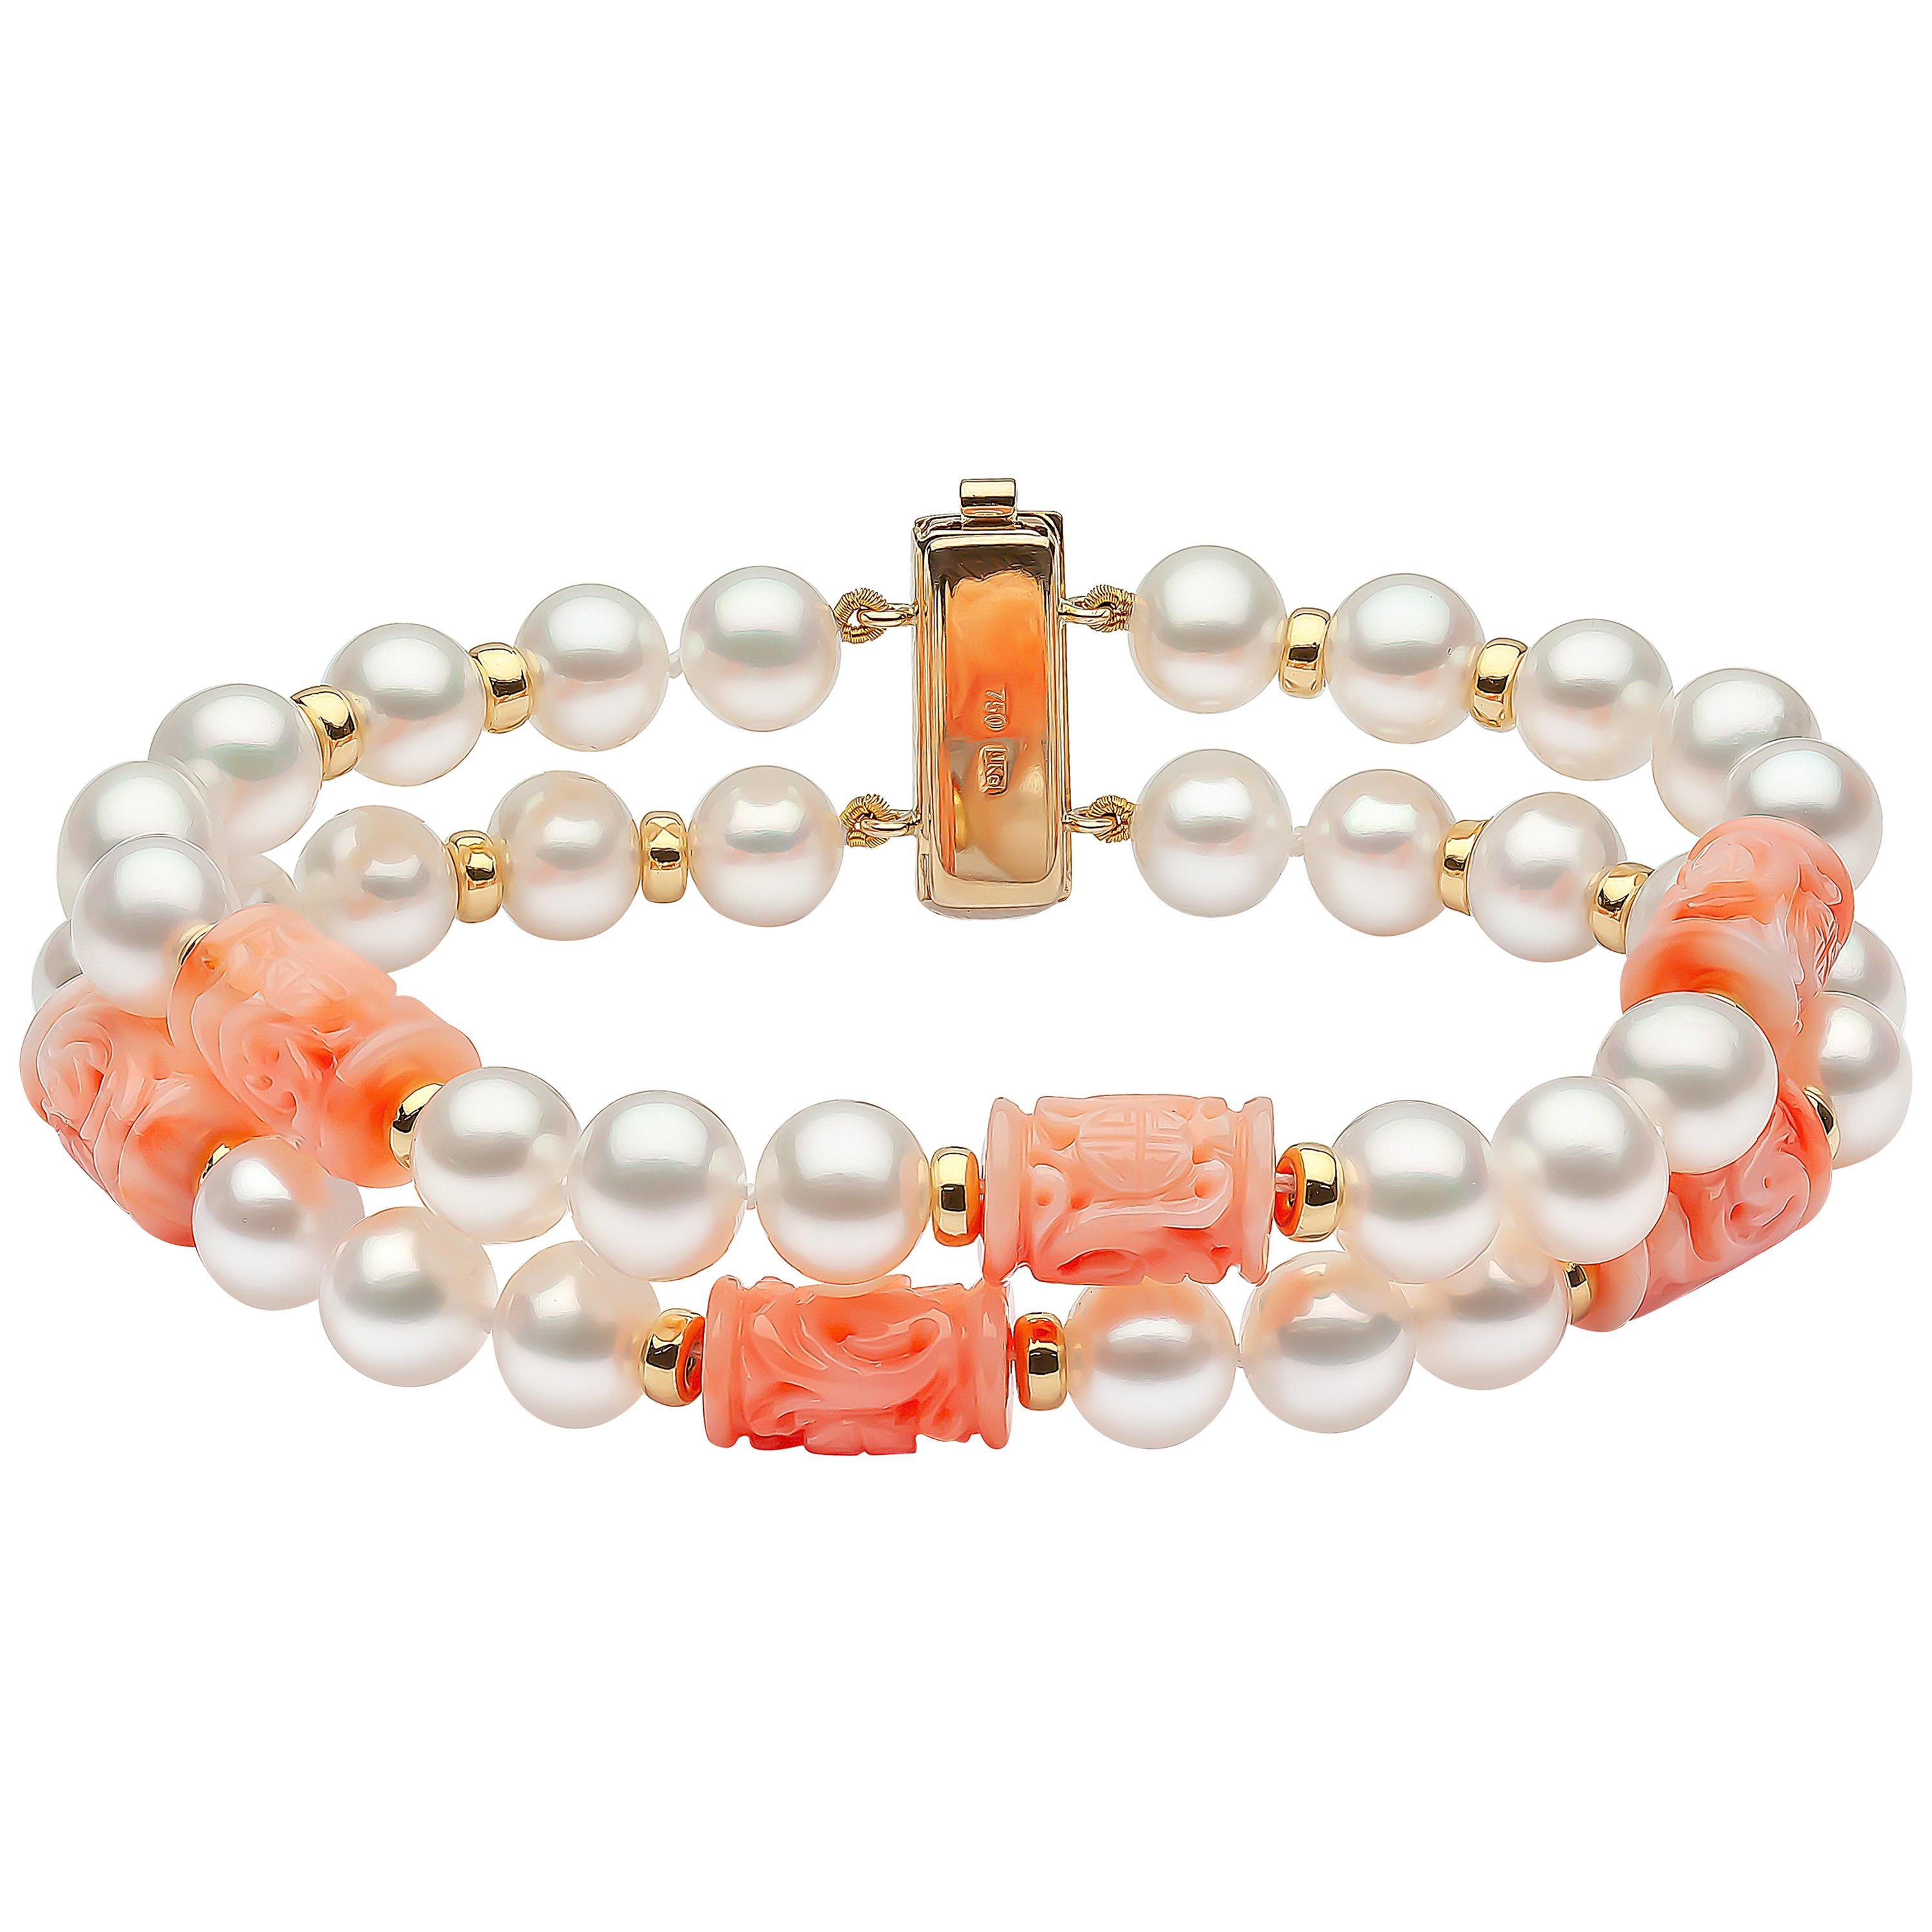 Yoko London Pearls Freshwater Pearl and Coral Bracelet in 18 Karat Yellow Gold